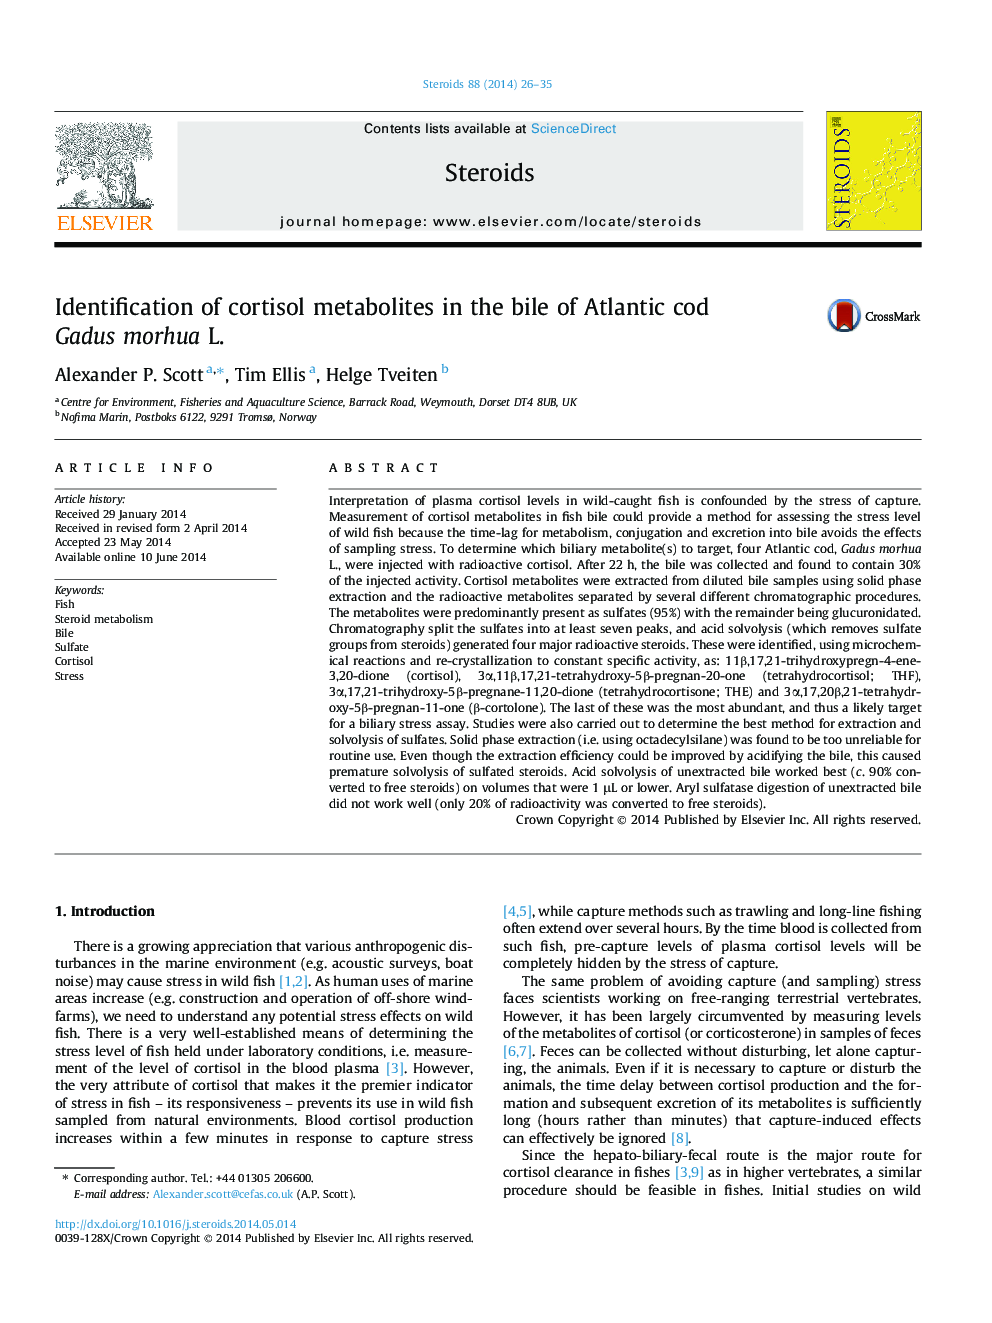 Identification of cortisol metabolites in the bile of Atlantic cod Gadus morhua L.